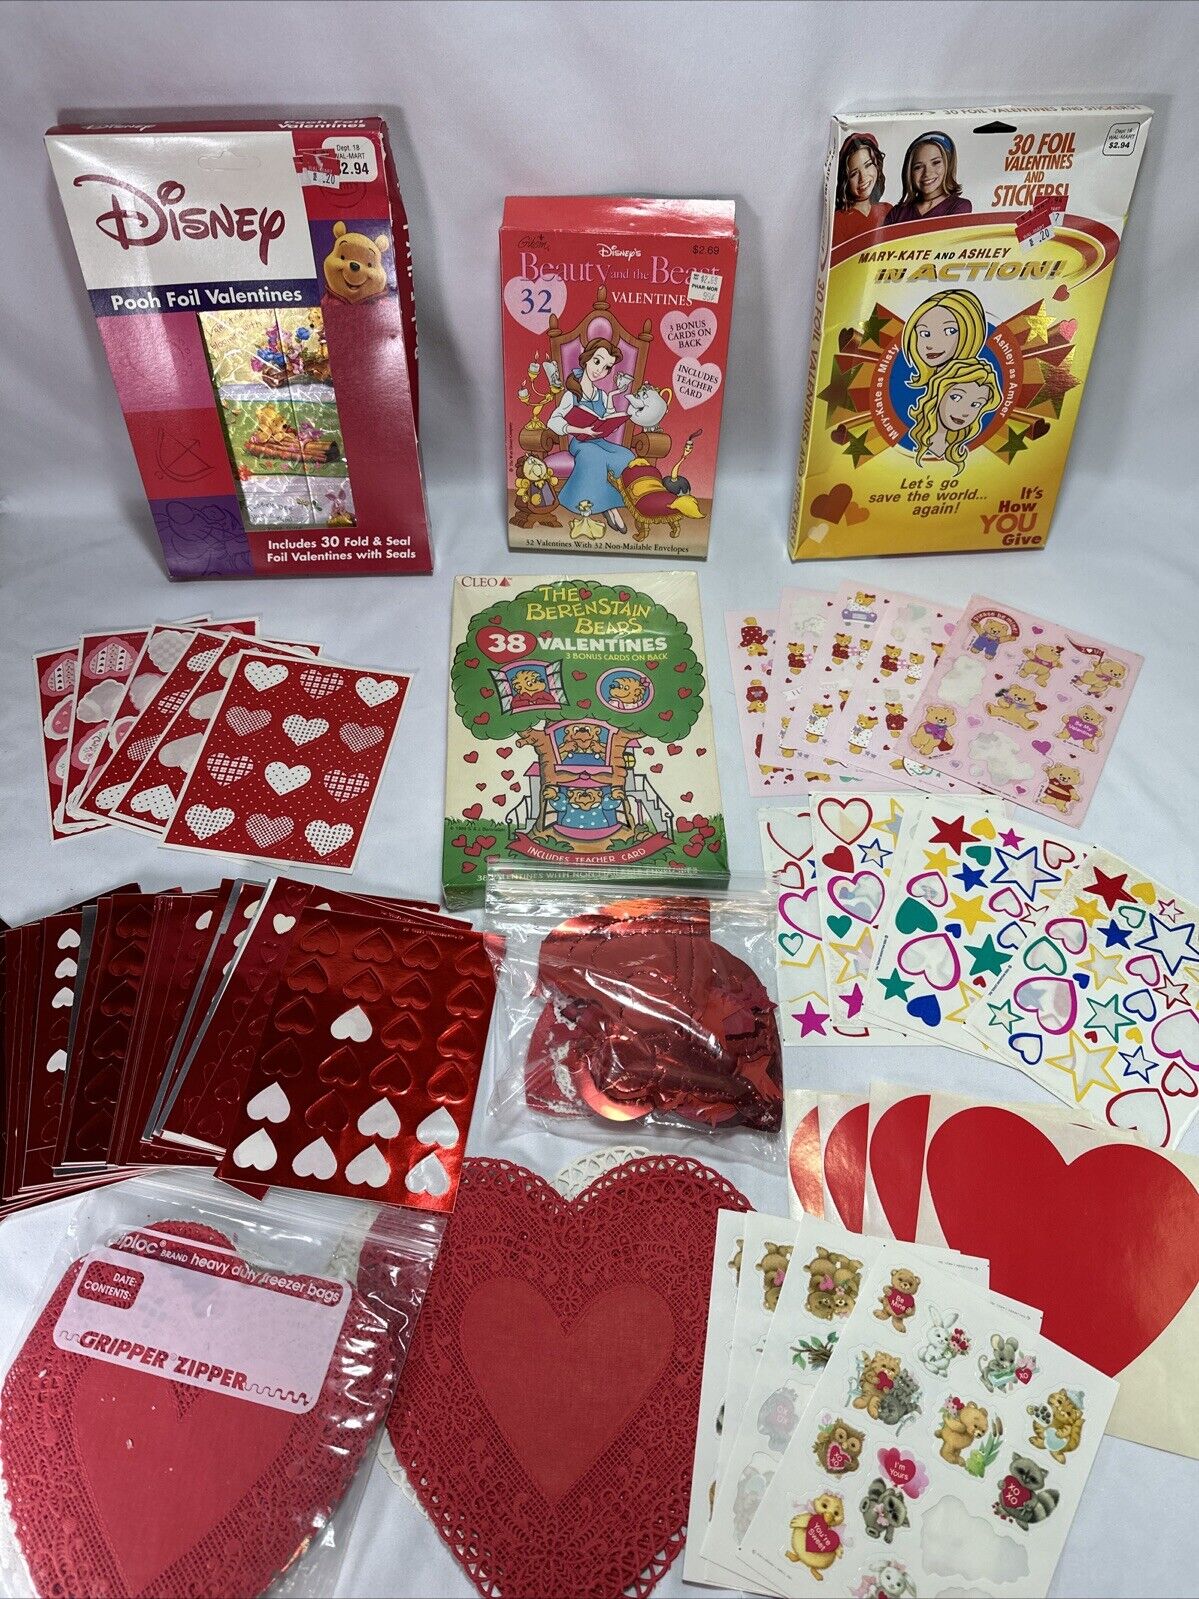 The Berenstain Bears Disney Pooh Mary Kate Ashley Valentines Card Lot New